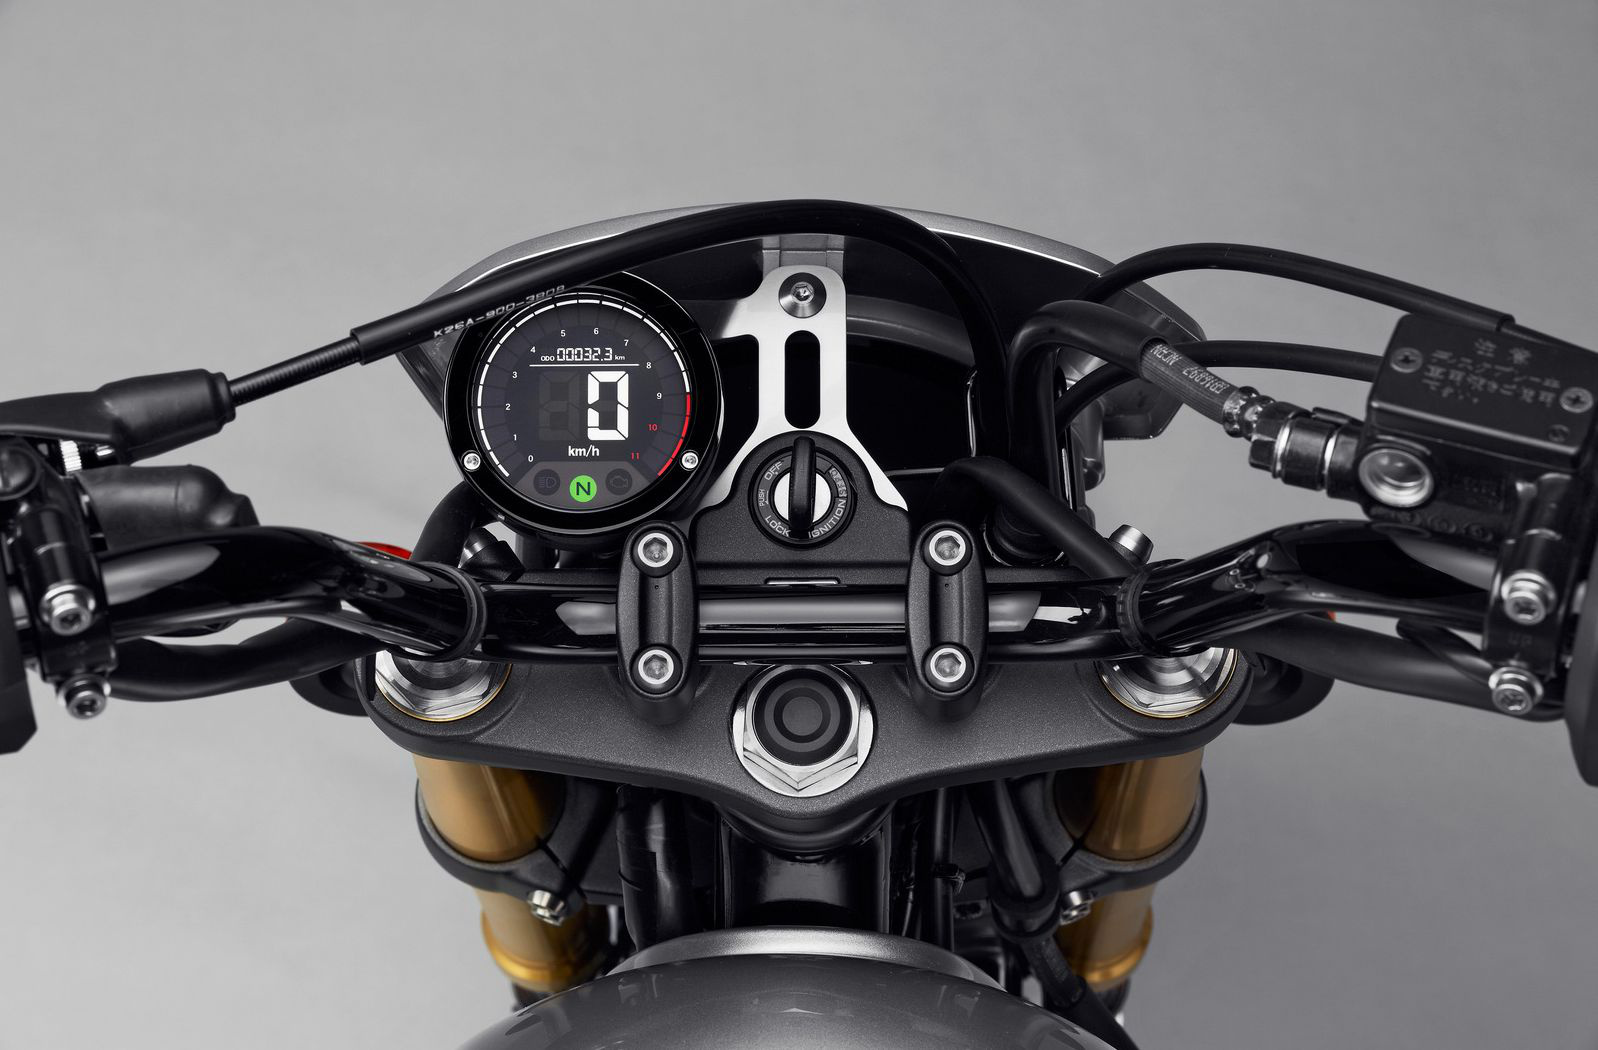 Honda CB1100 Super Bold'Or Custom Concept